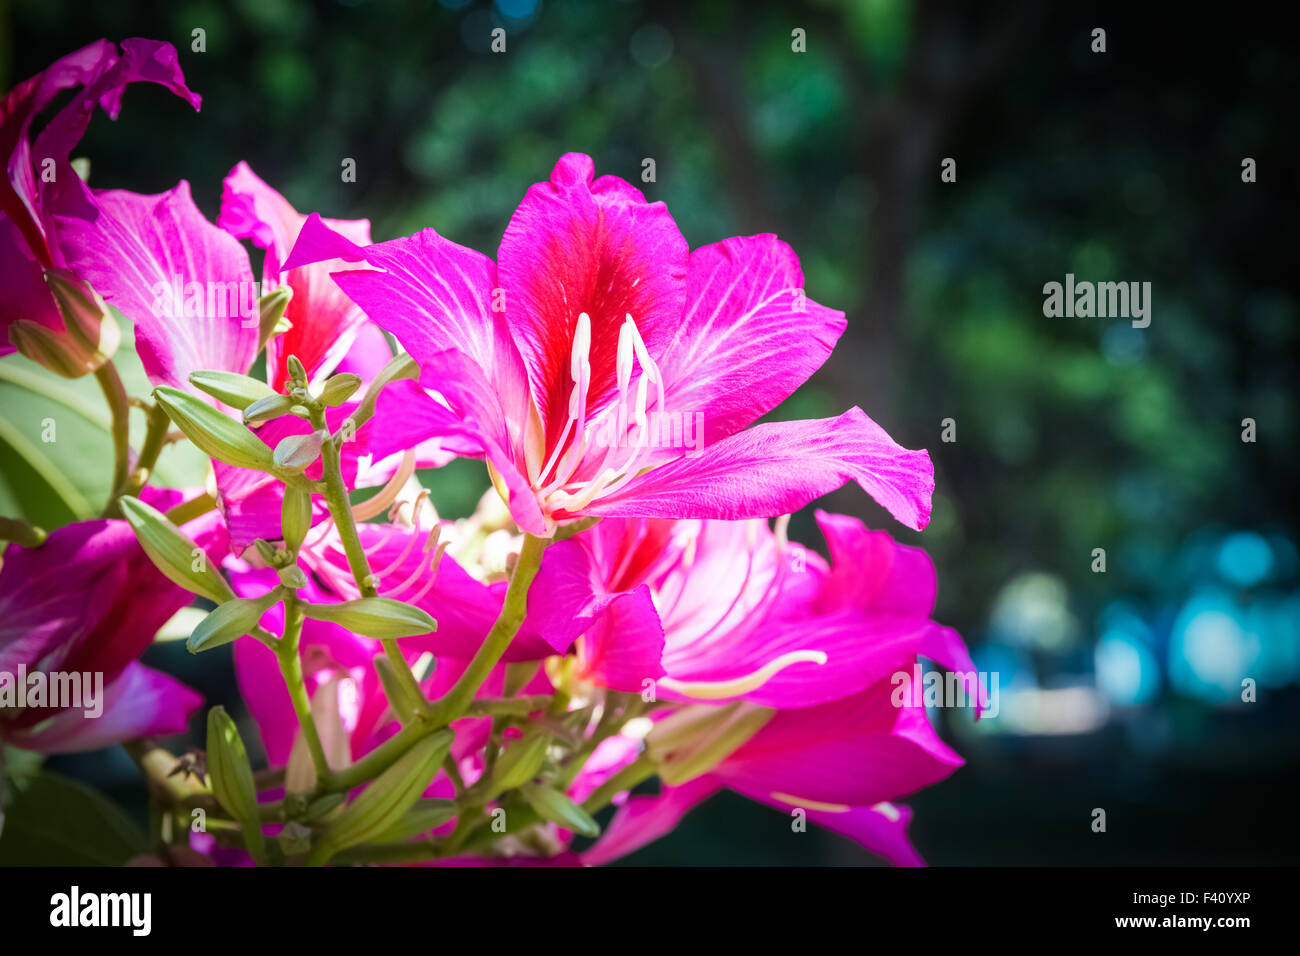 bauhinia flower Stock Photo